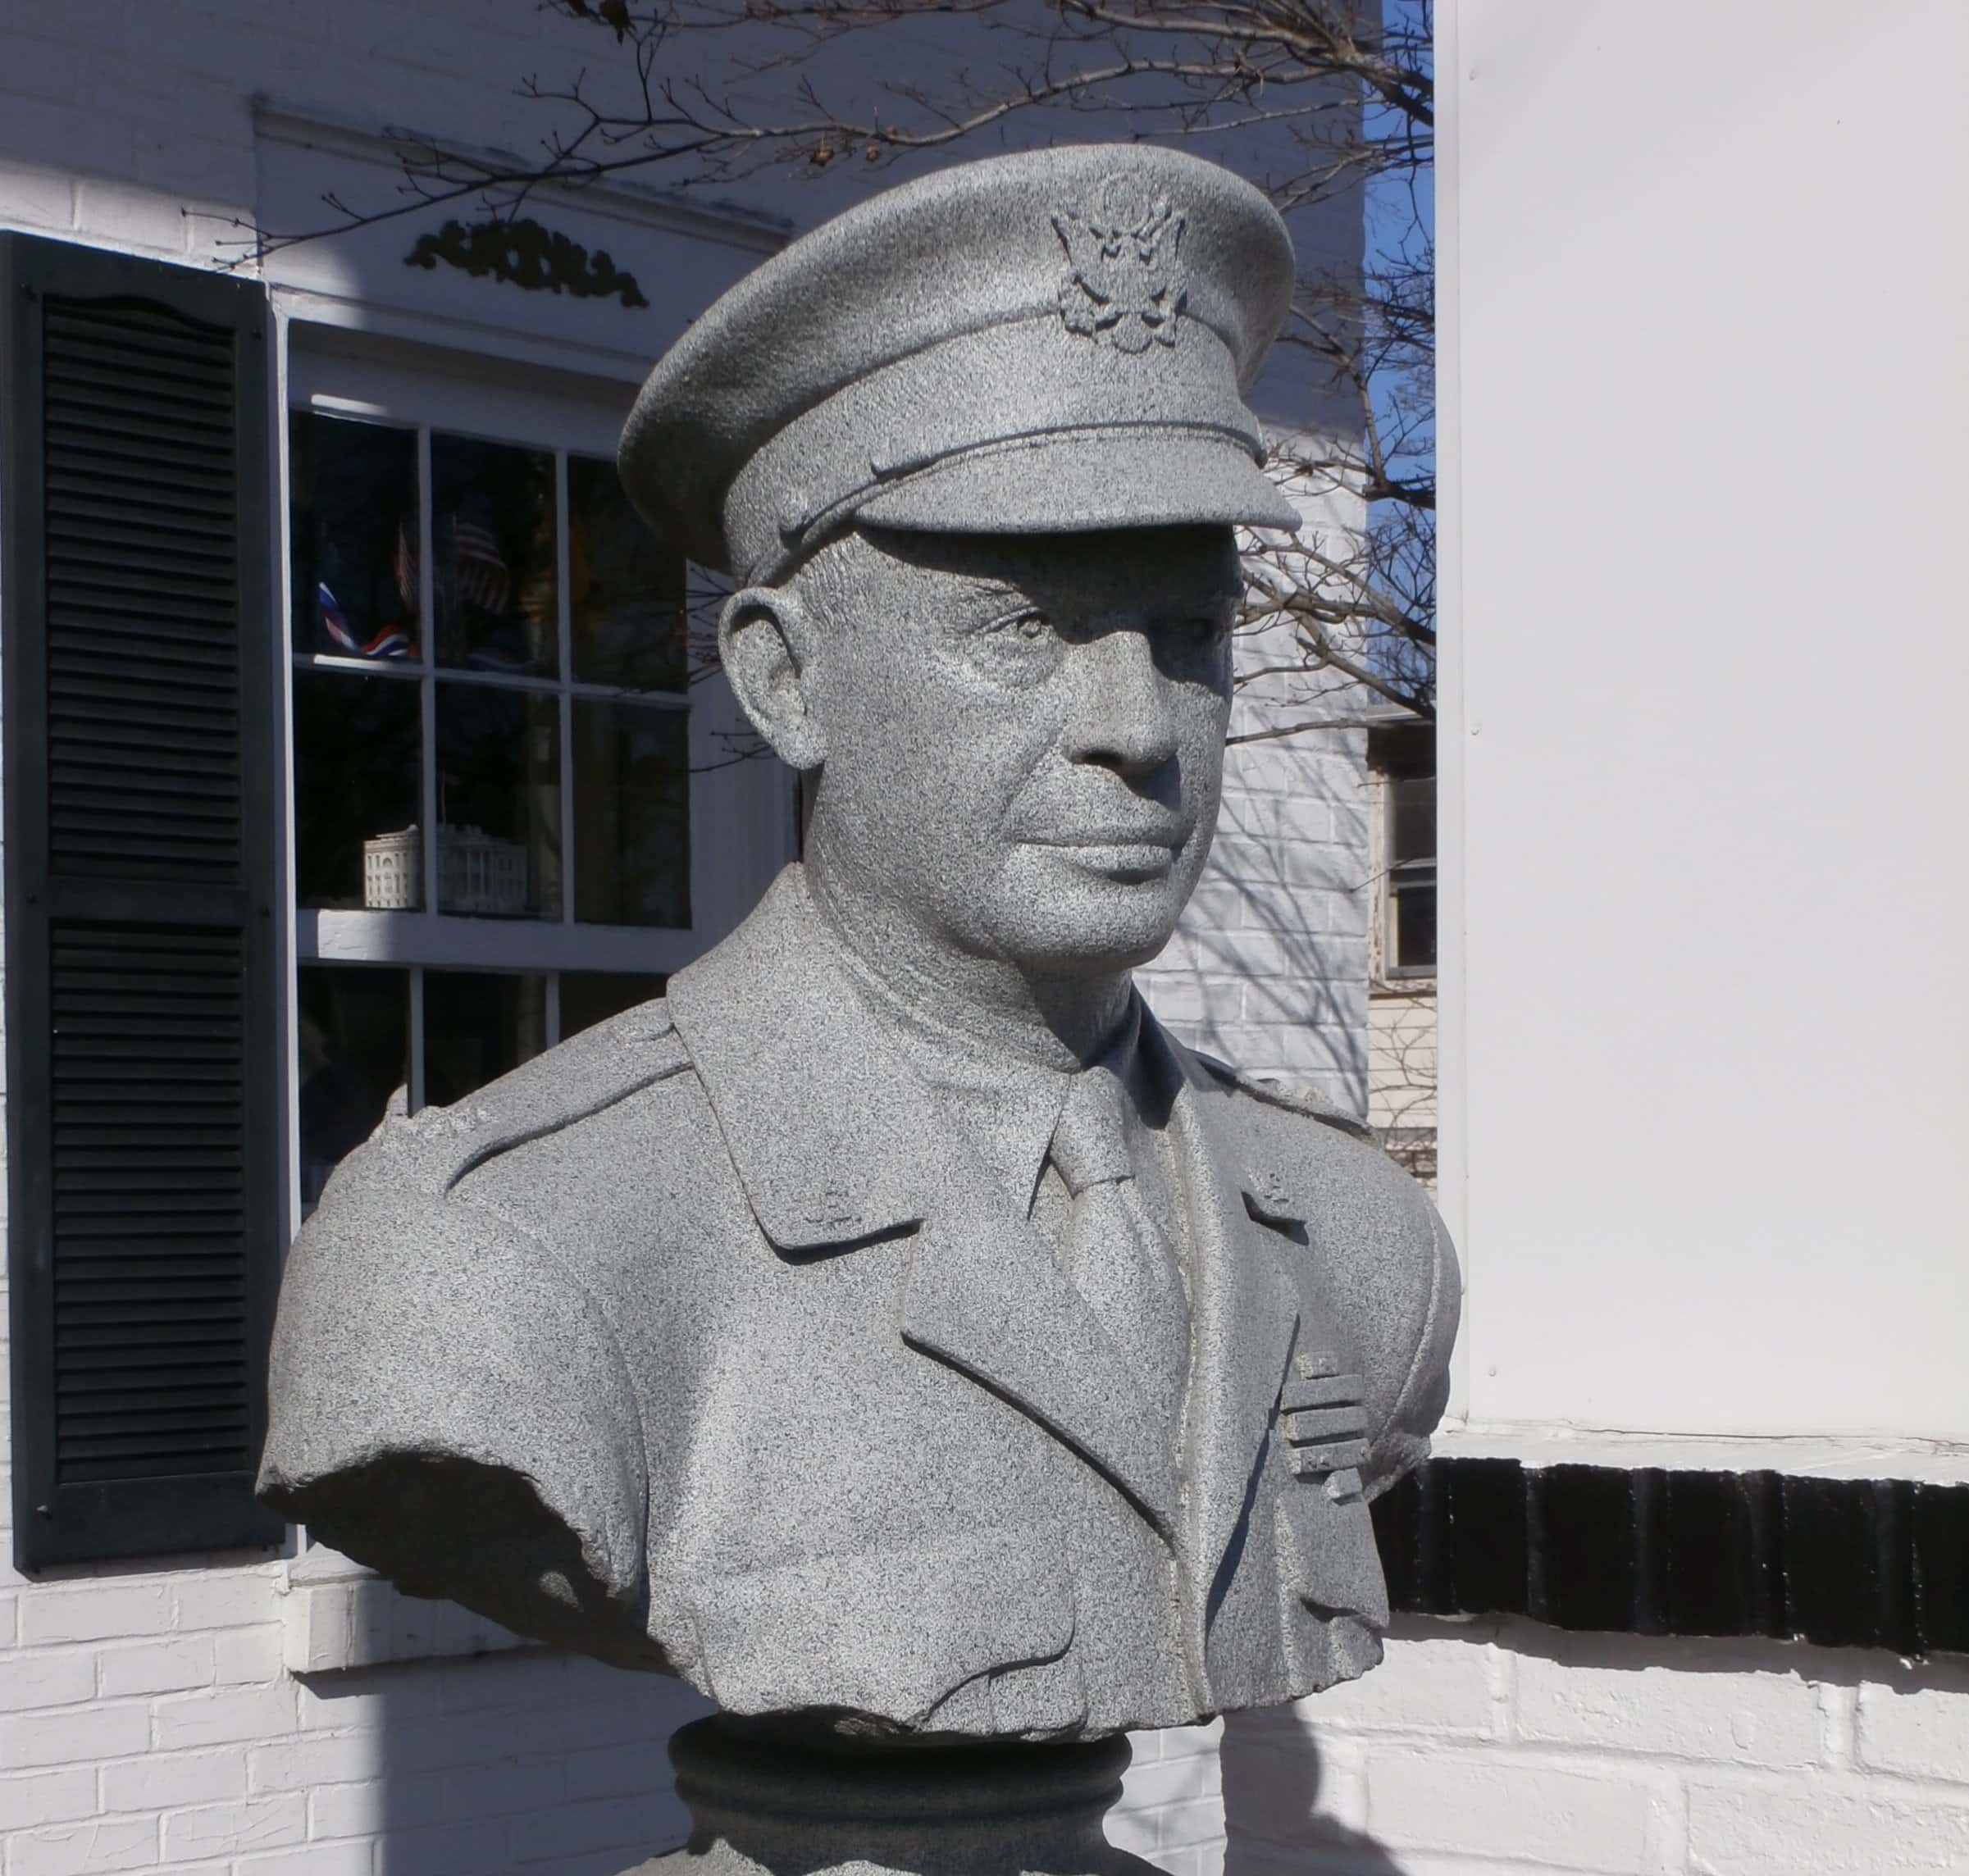 General Eisenhower statue - Gettysburg, Pennsylvania